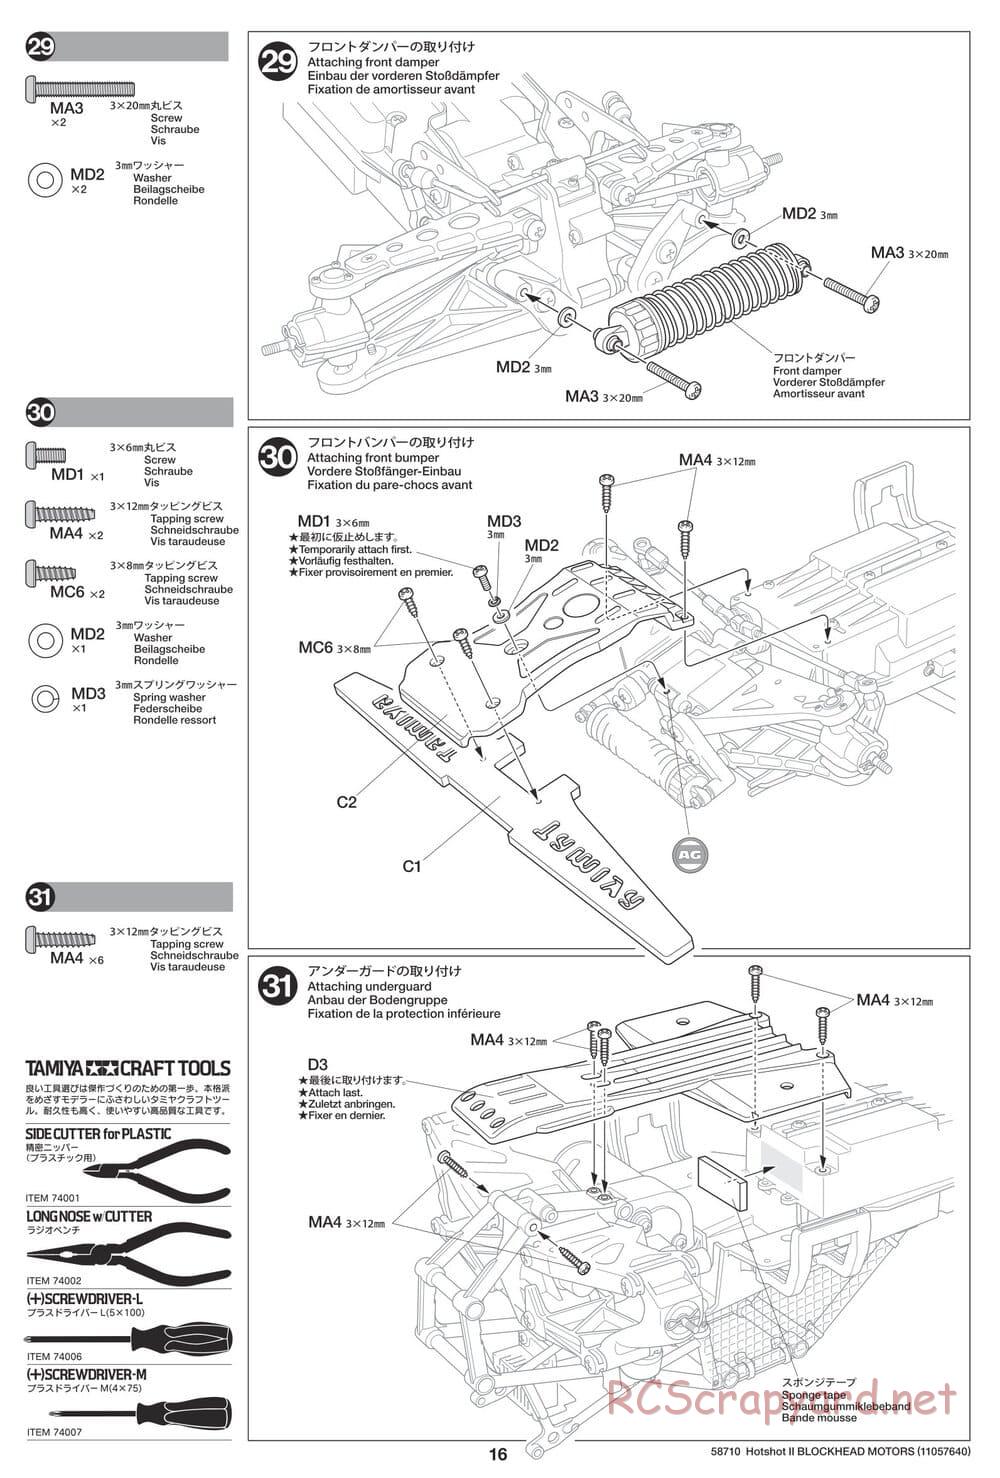 Tamiya - Hotshot II Blockhead Motors - HS Chassis - Manual - Page 16